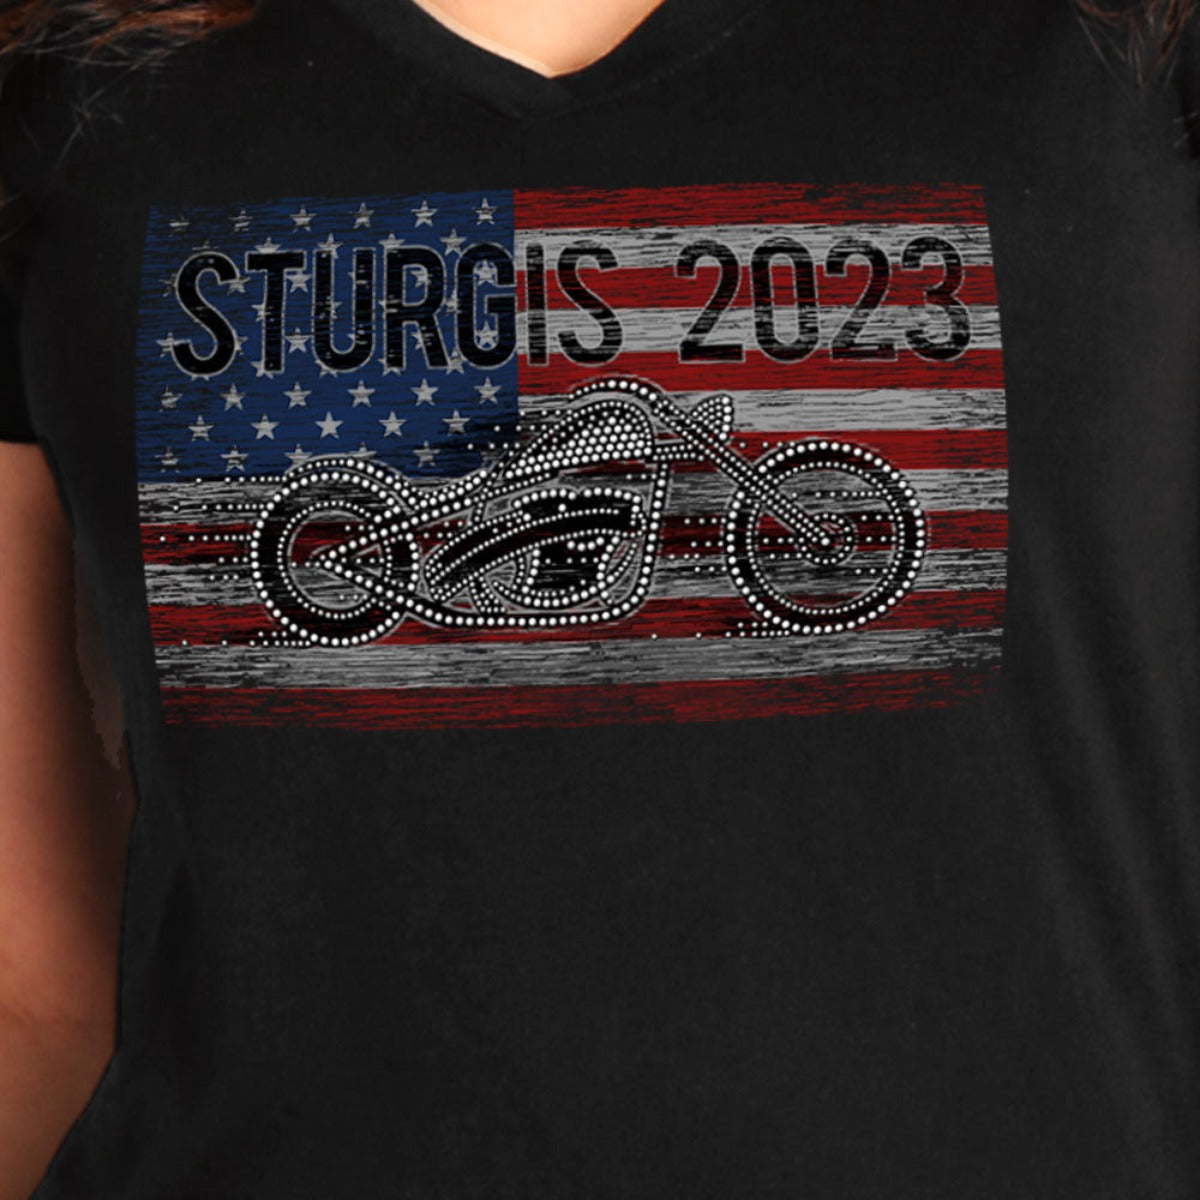 Hot Leathers Sturgis 2023 Ladies Bling Bike T-Shirt, Black